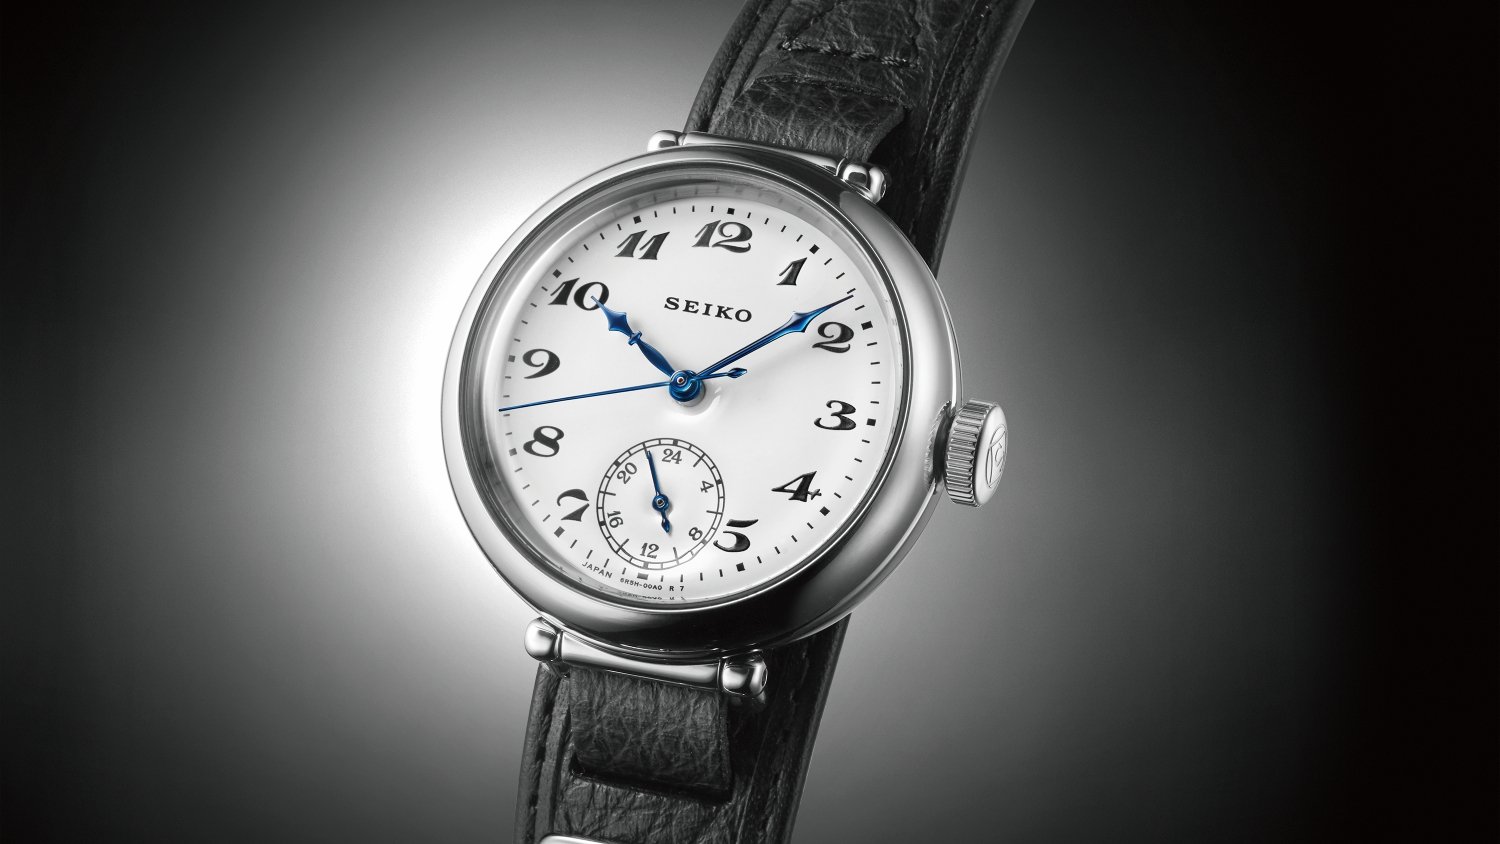 SEIKOブランド100周年記念。SEIKOの名を初めて冠した腕時計に ...